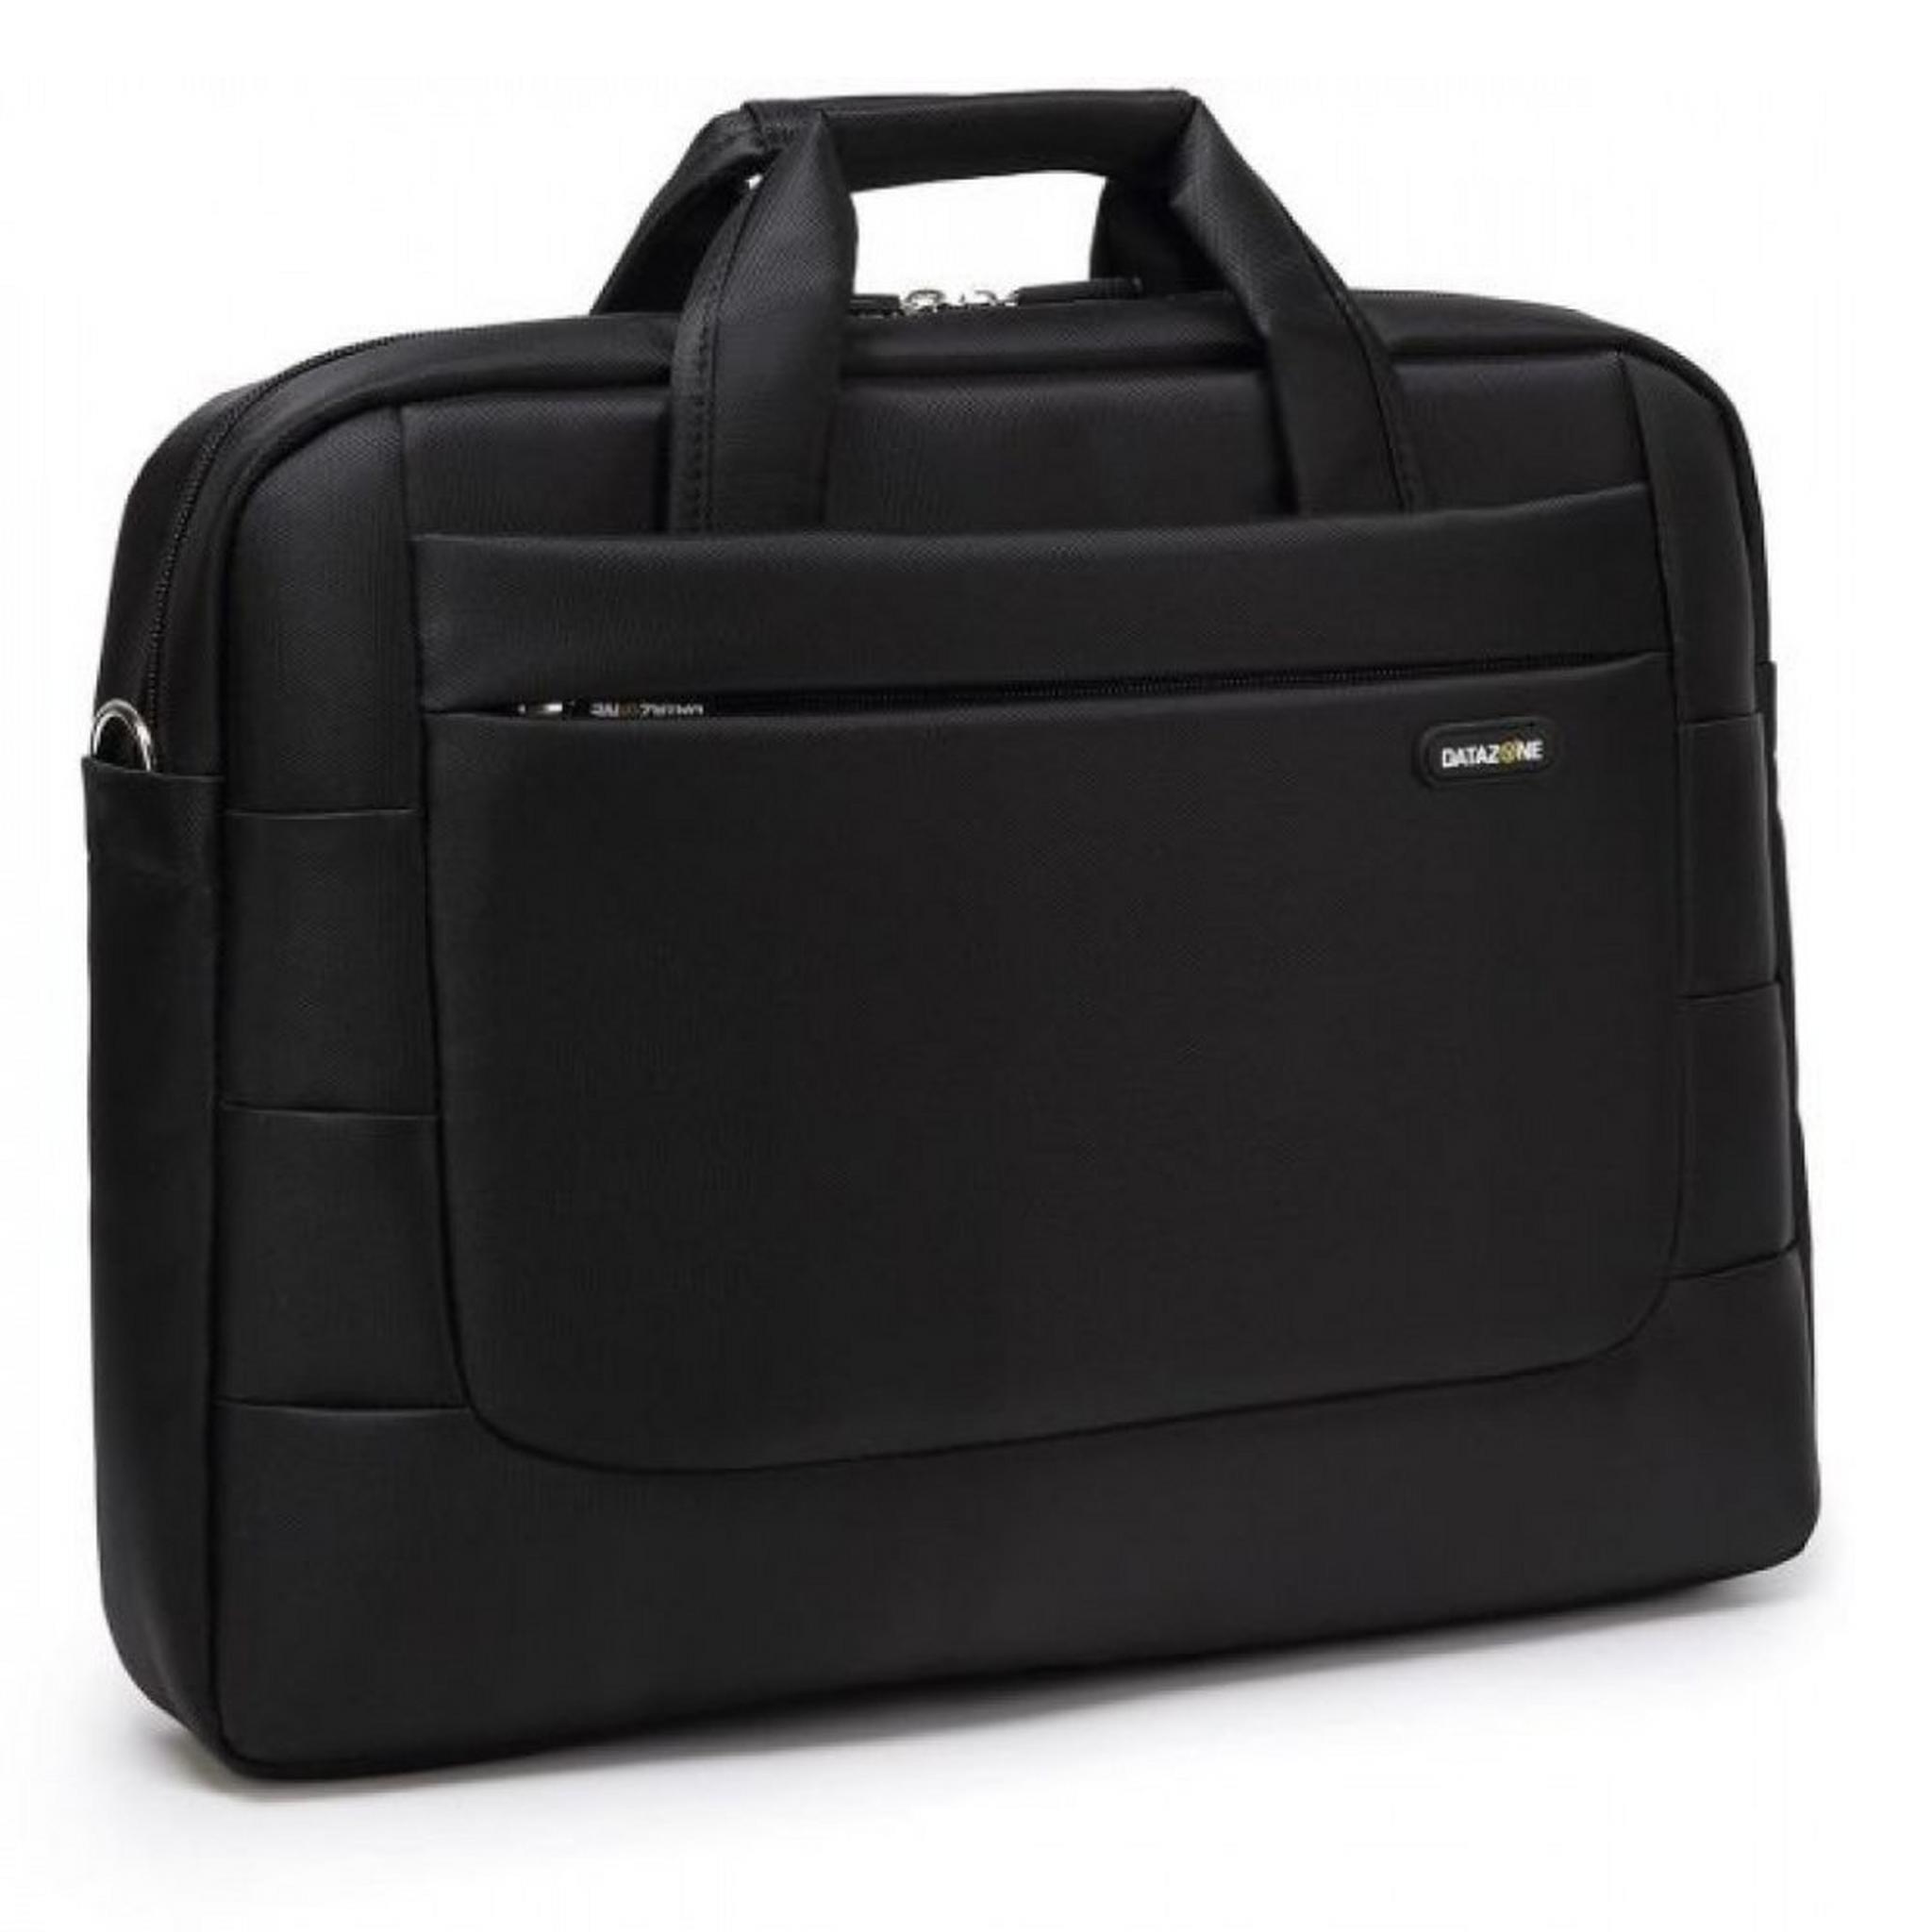 Datazone Shoulder Bag 15.6-inch Laptop Black Price | Shop Online ...